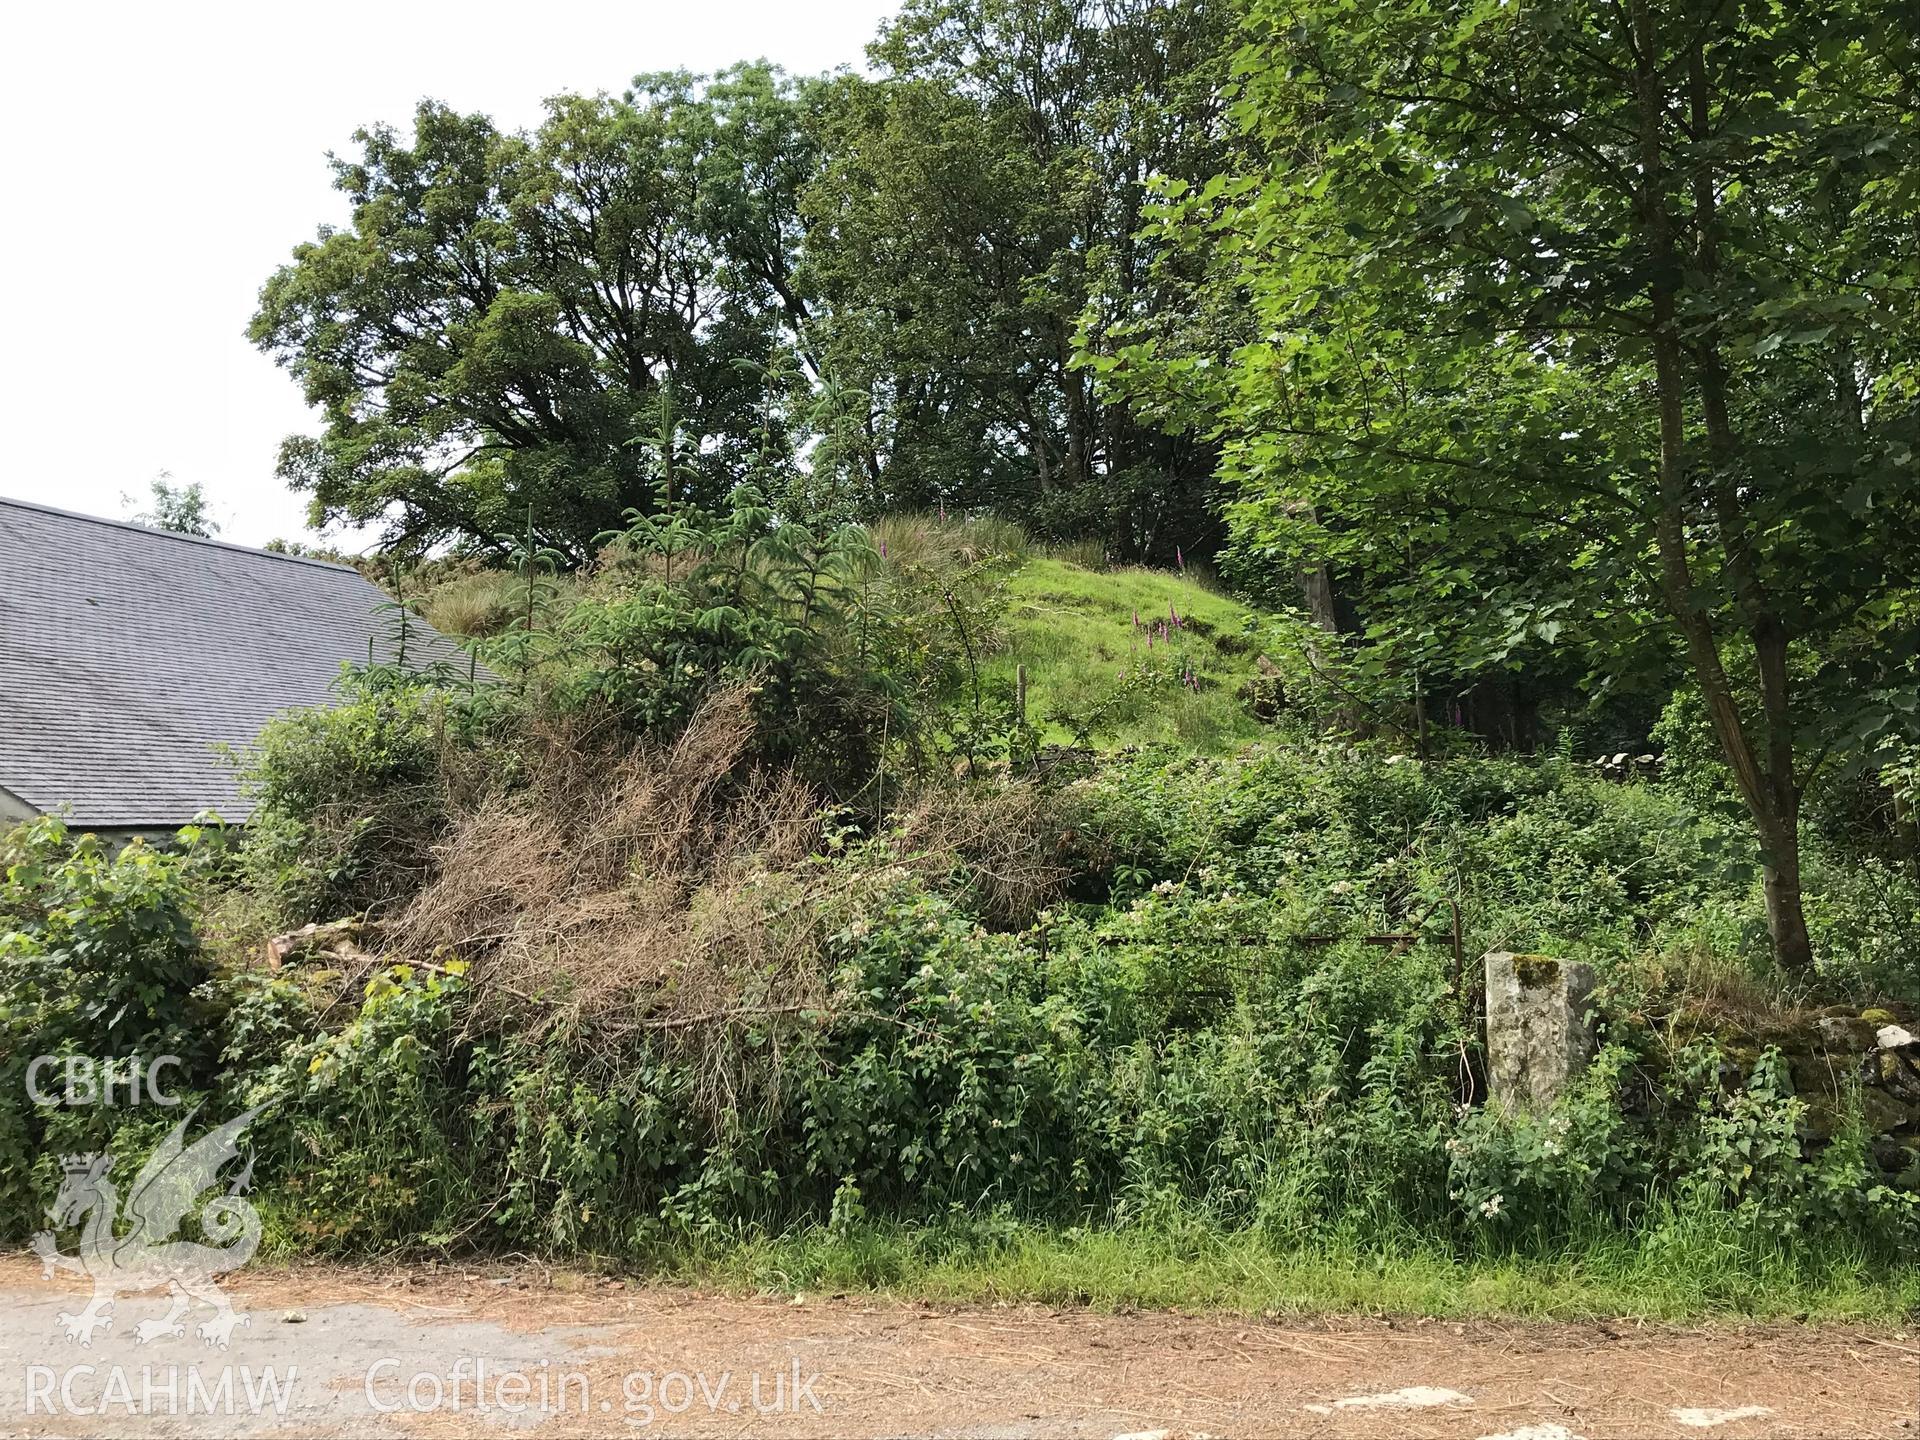 Colour photo showing Dolbenmaen castle mound, taken by Paul R. Davis, 23rd June 2018.